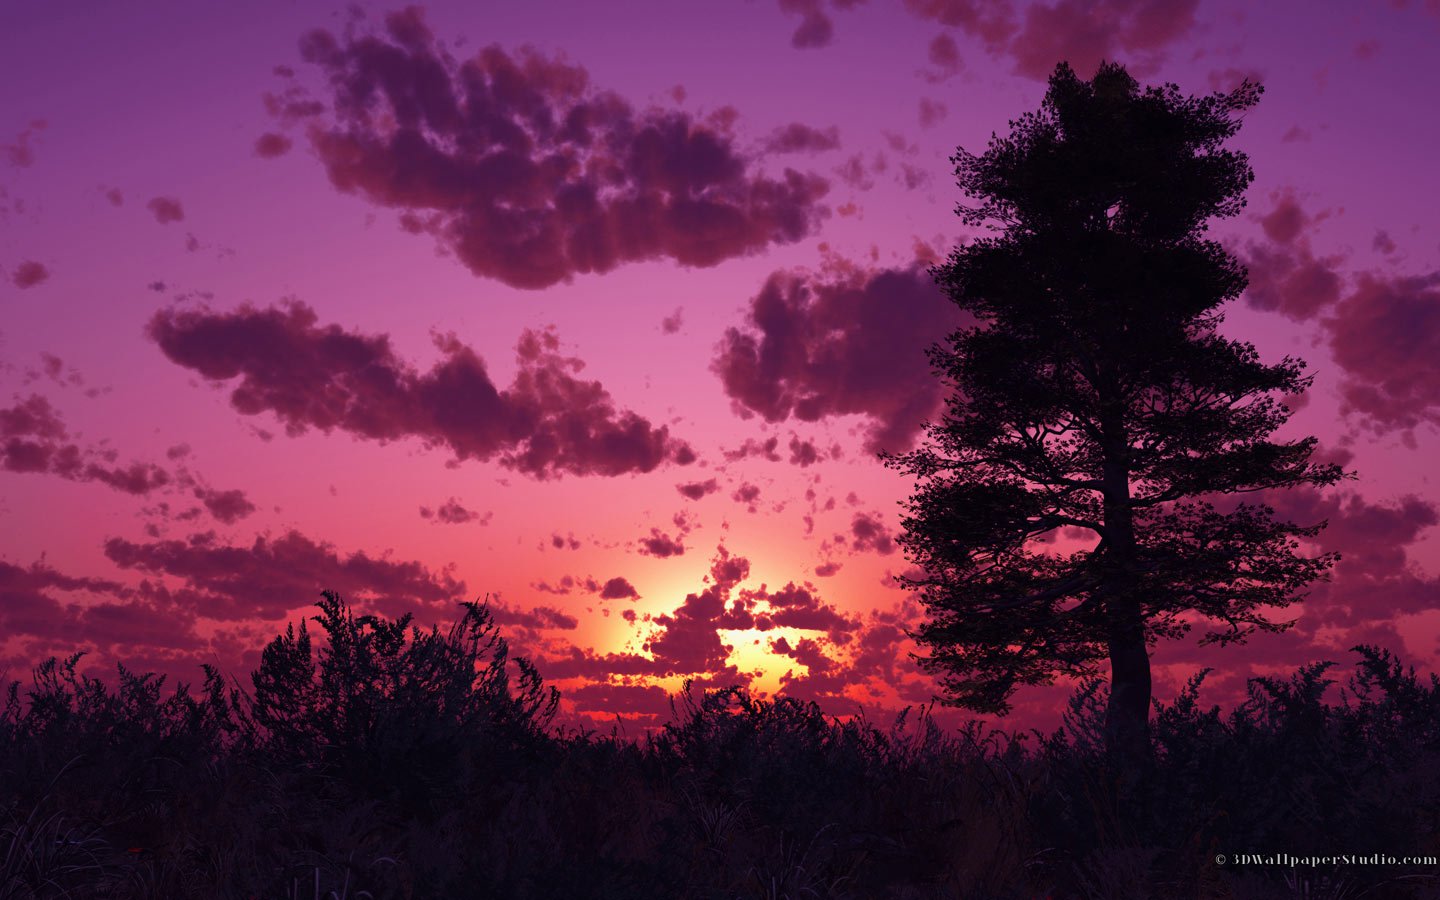  Purple Sunset Wallpaper Desktop Nature Pics Wallpaper Gallery